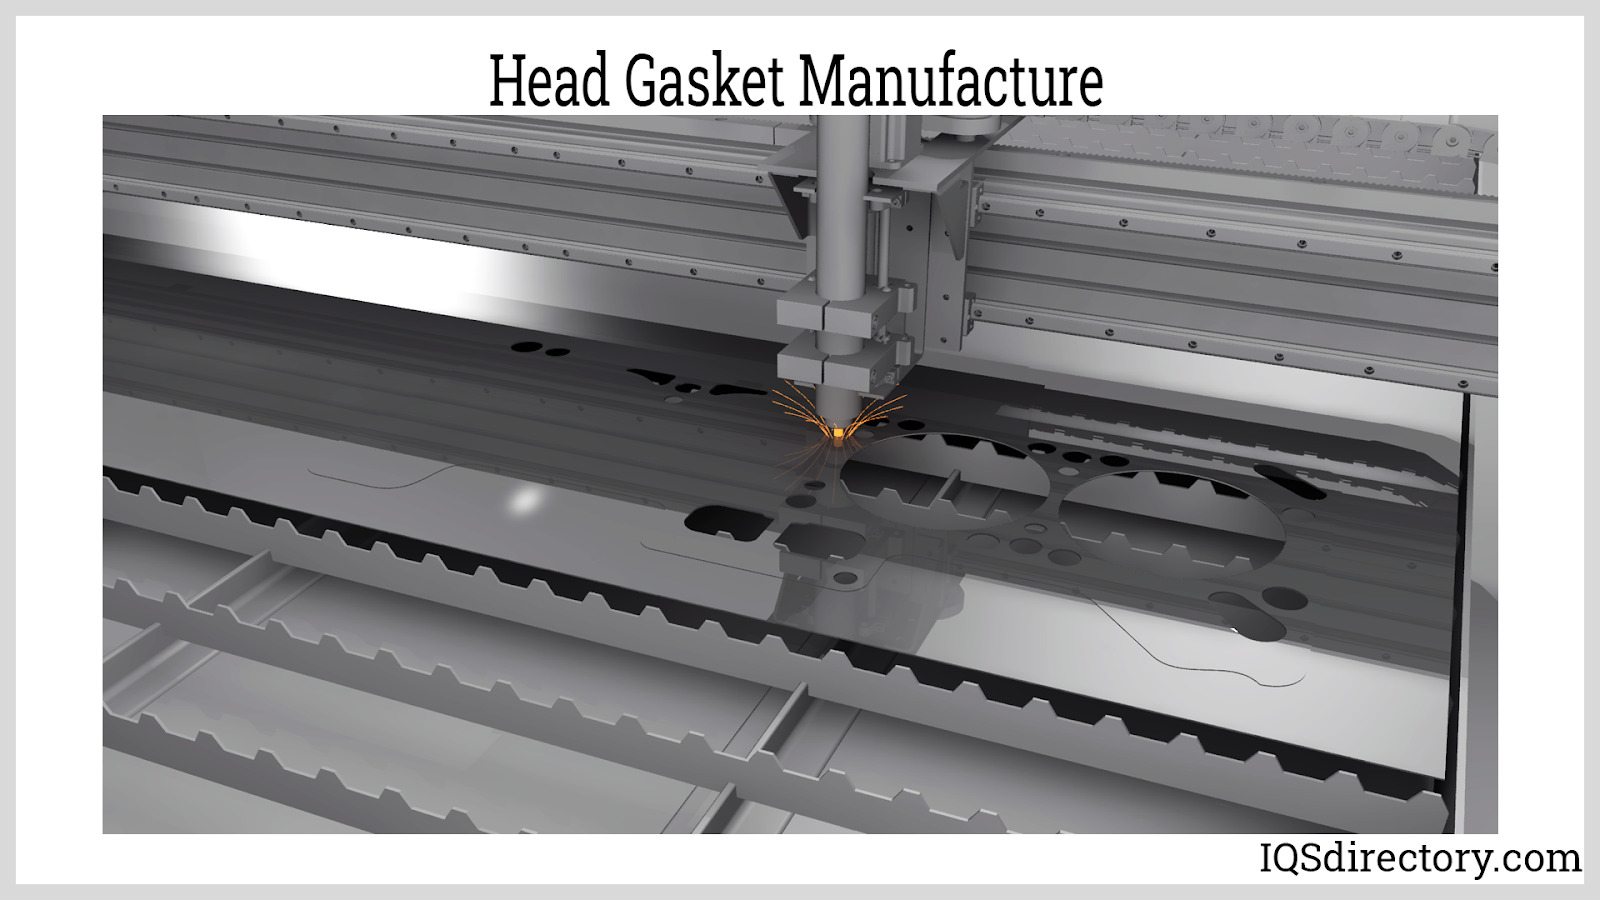 Head Gasket Manufacture